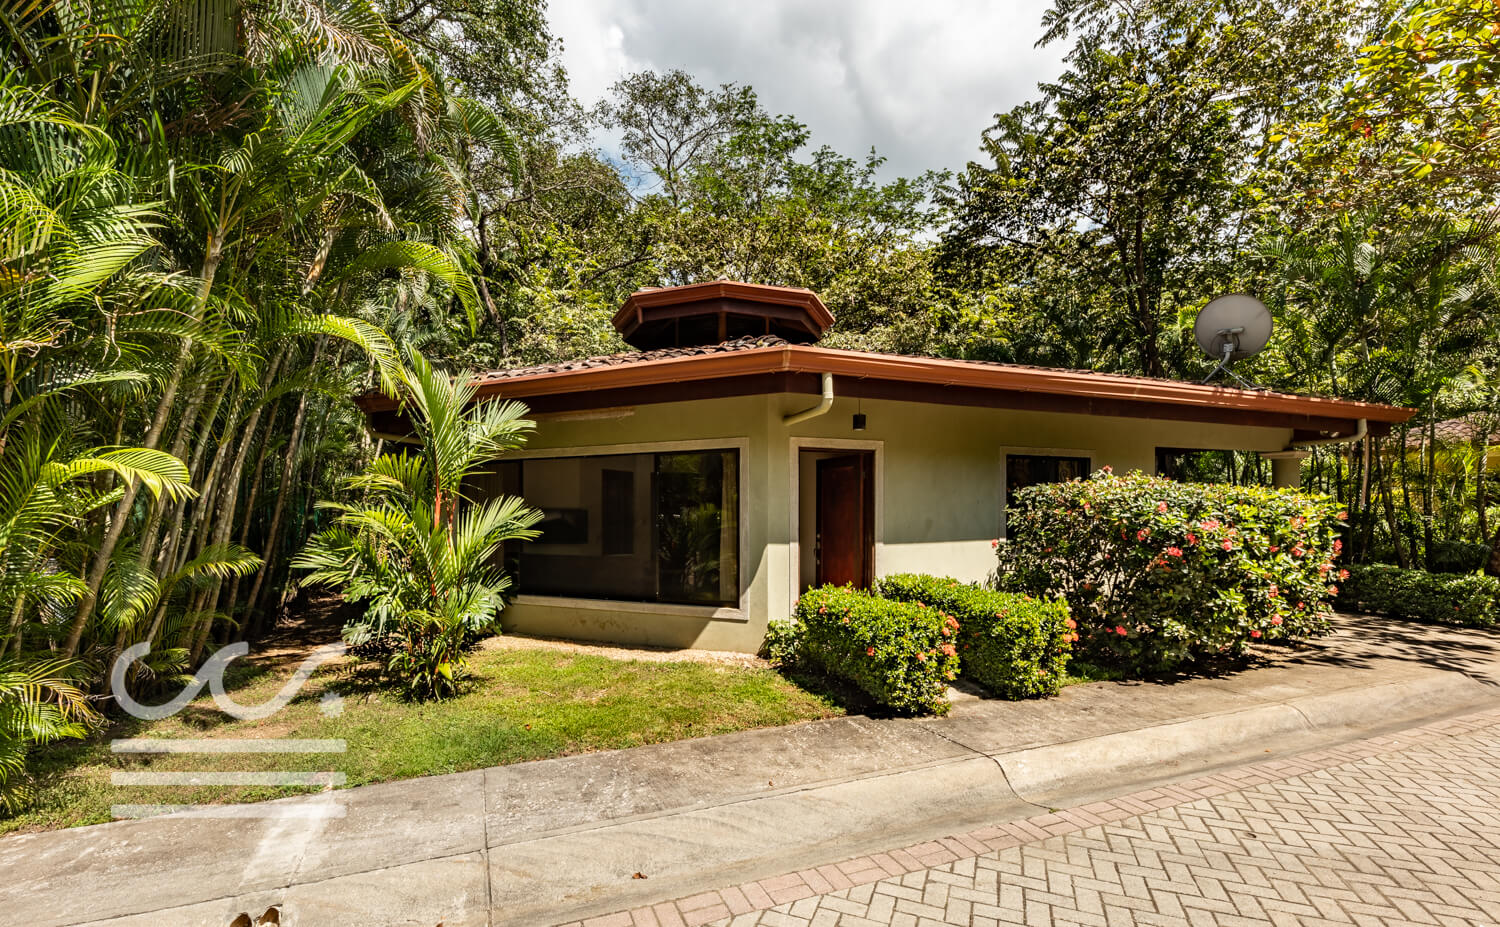 Paseo-del-Sol-#9-Wanderlust-Realty-Real-Estate-Rentals-Nosara-Costa-Rica-5.jpg